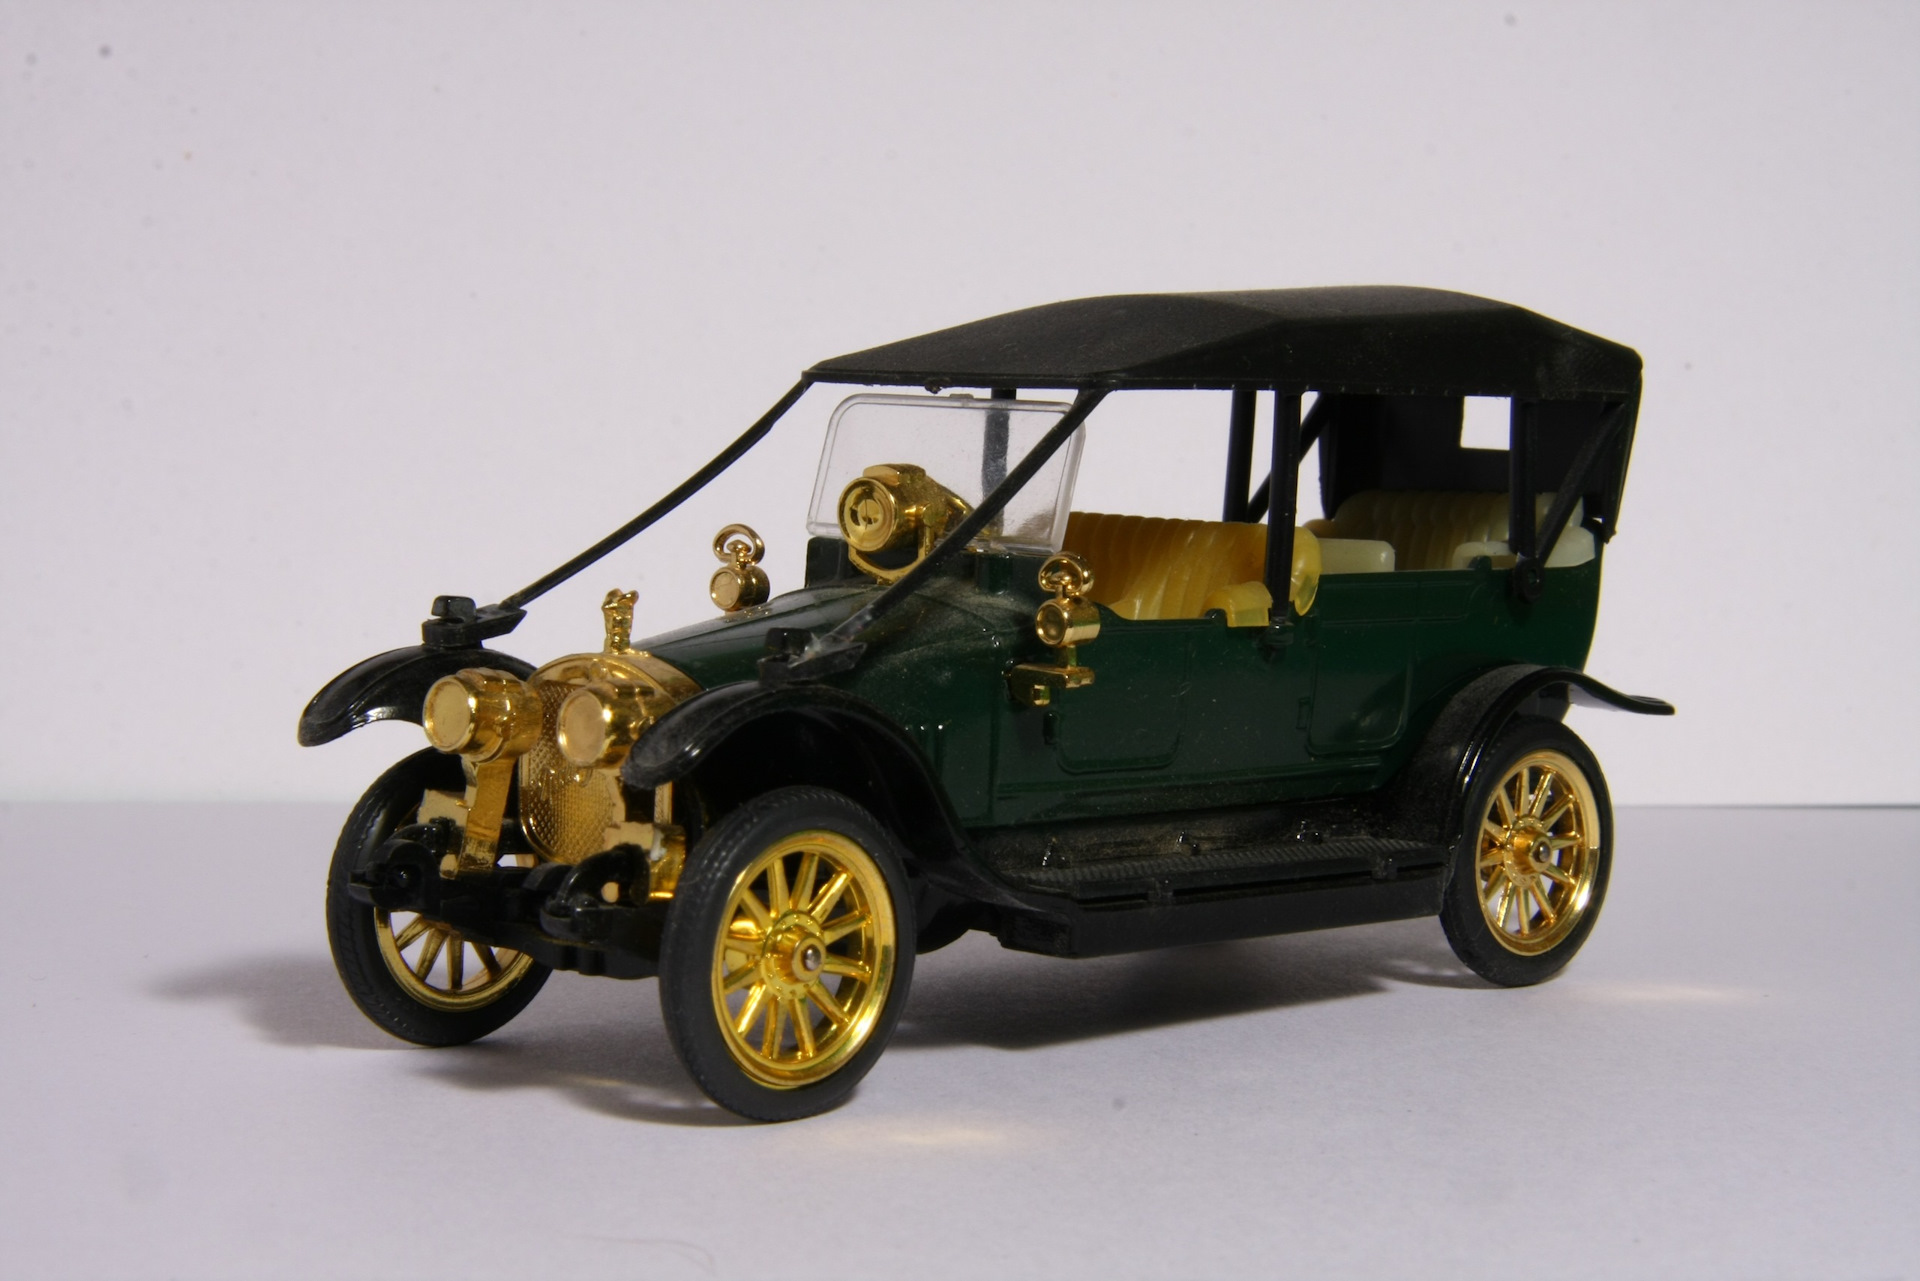 Автомобиль балт. Руссо-Балт с24/40. Руссо-Балт 1909. Руссо-Балт с24/40 Монако. Руссо-Балт с24/40 кабриолет.